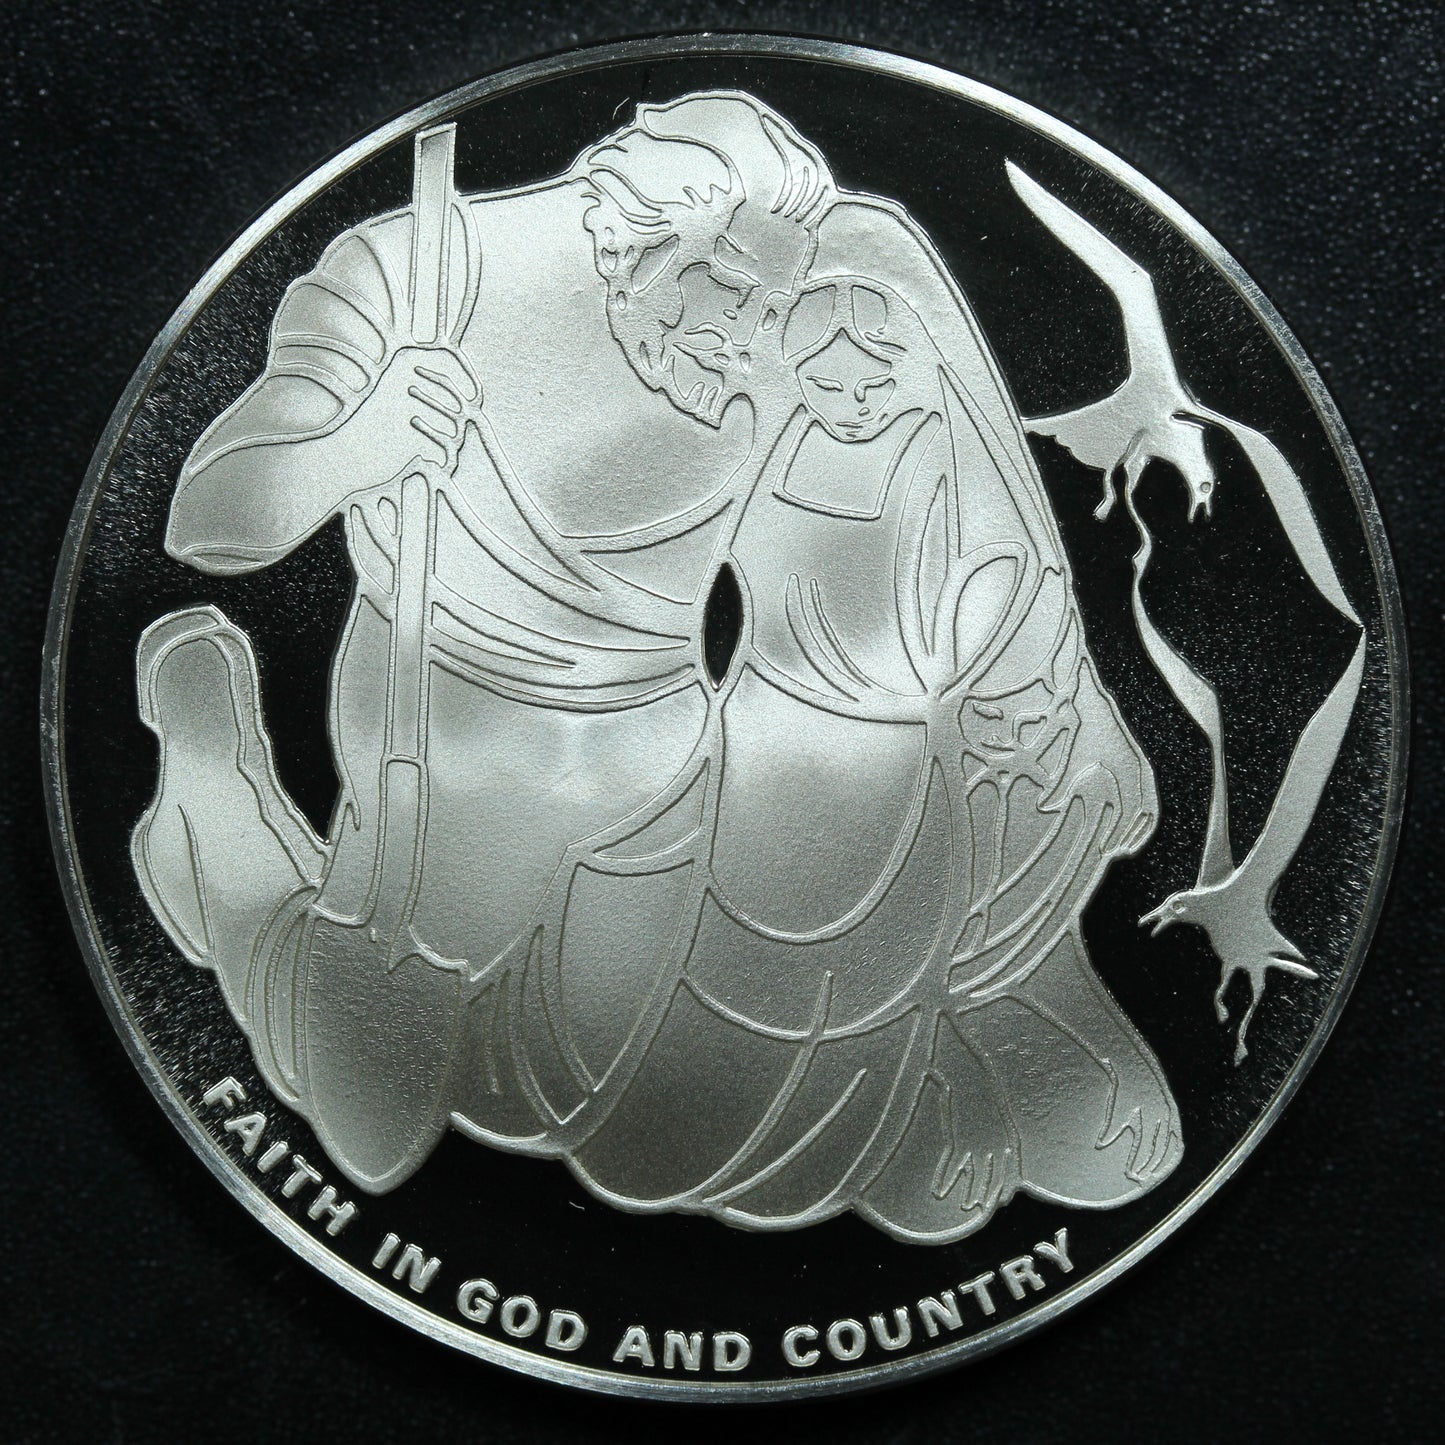 Franklin Mint 50 State Bicentennial Medal - UTAH Sterling Silver Proof w/ Capsule